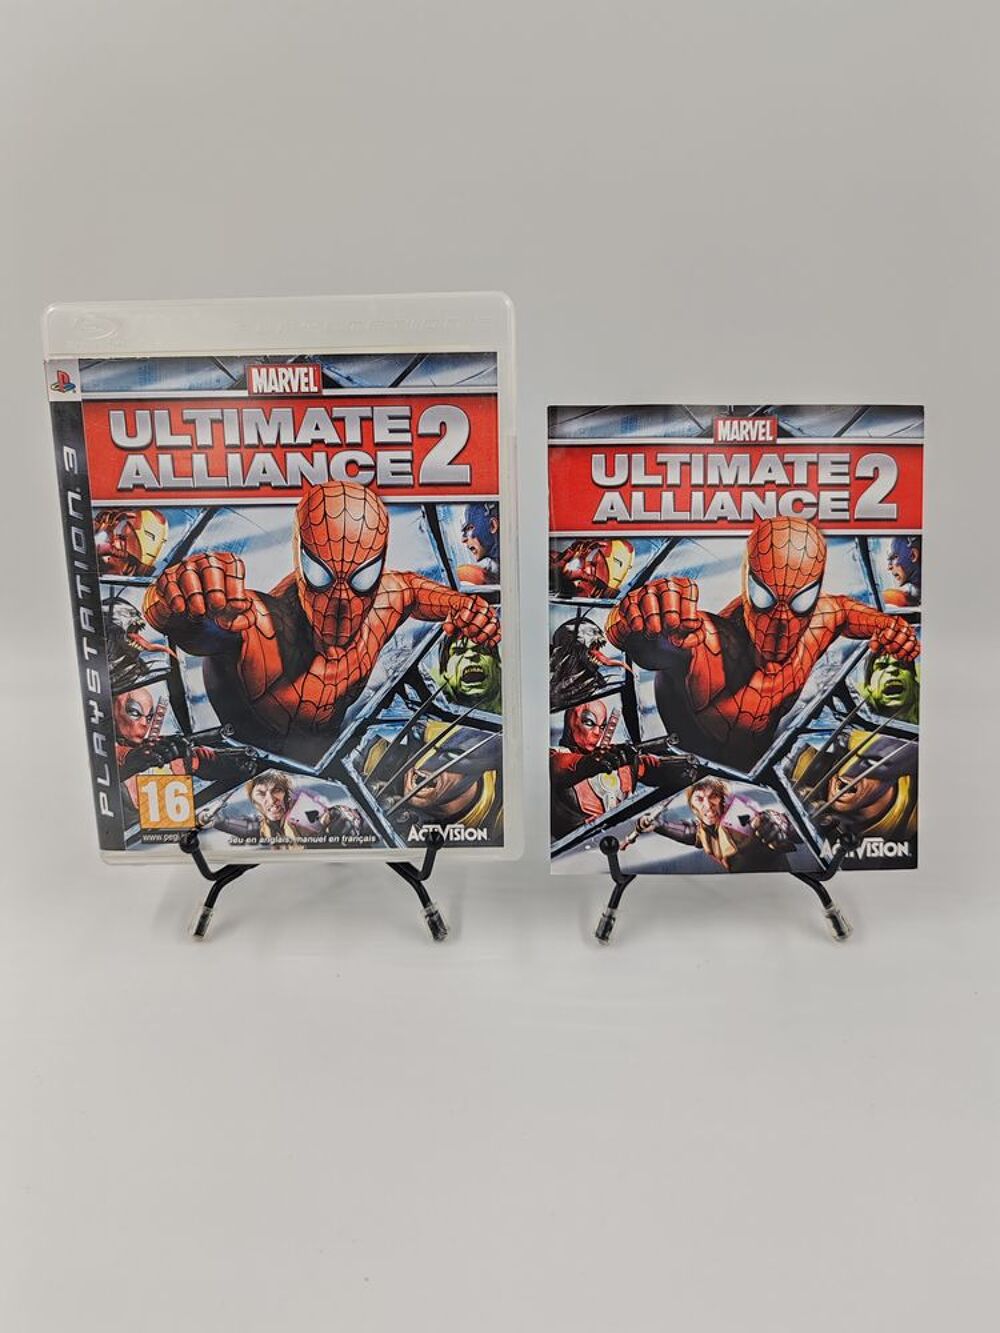 Jeu PS3 Playstation 3 Marvel Ultimate Alliance 2 complet Consoles et jeux vidos